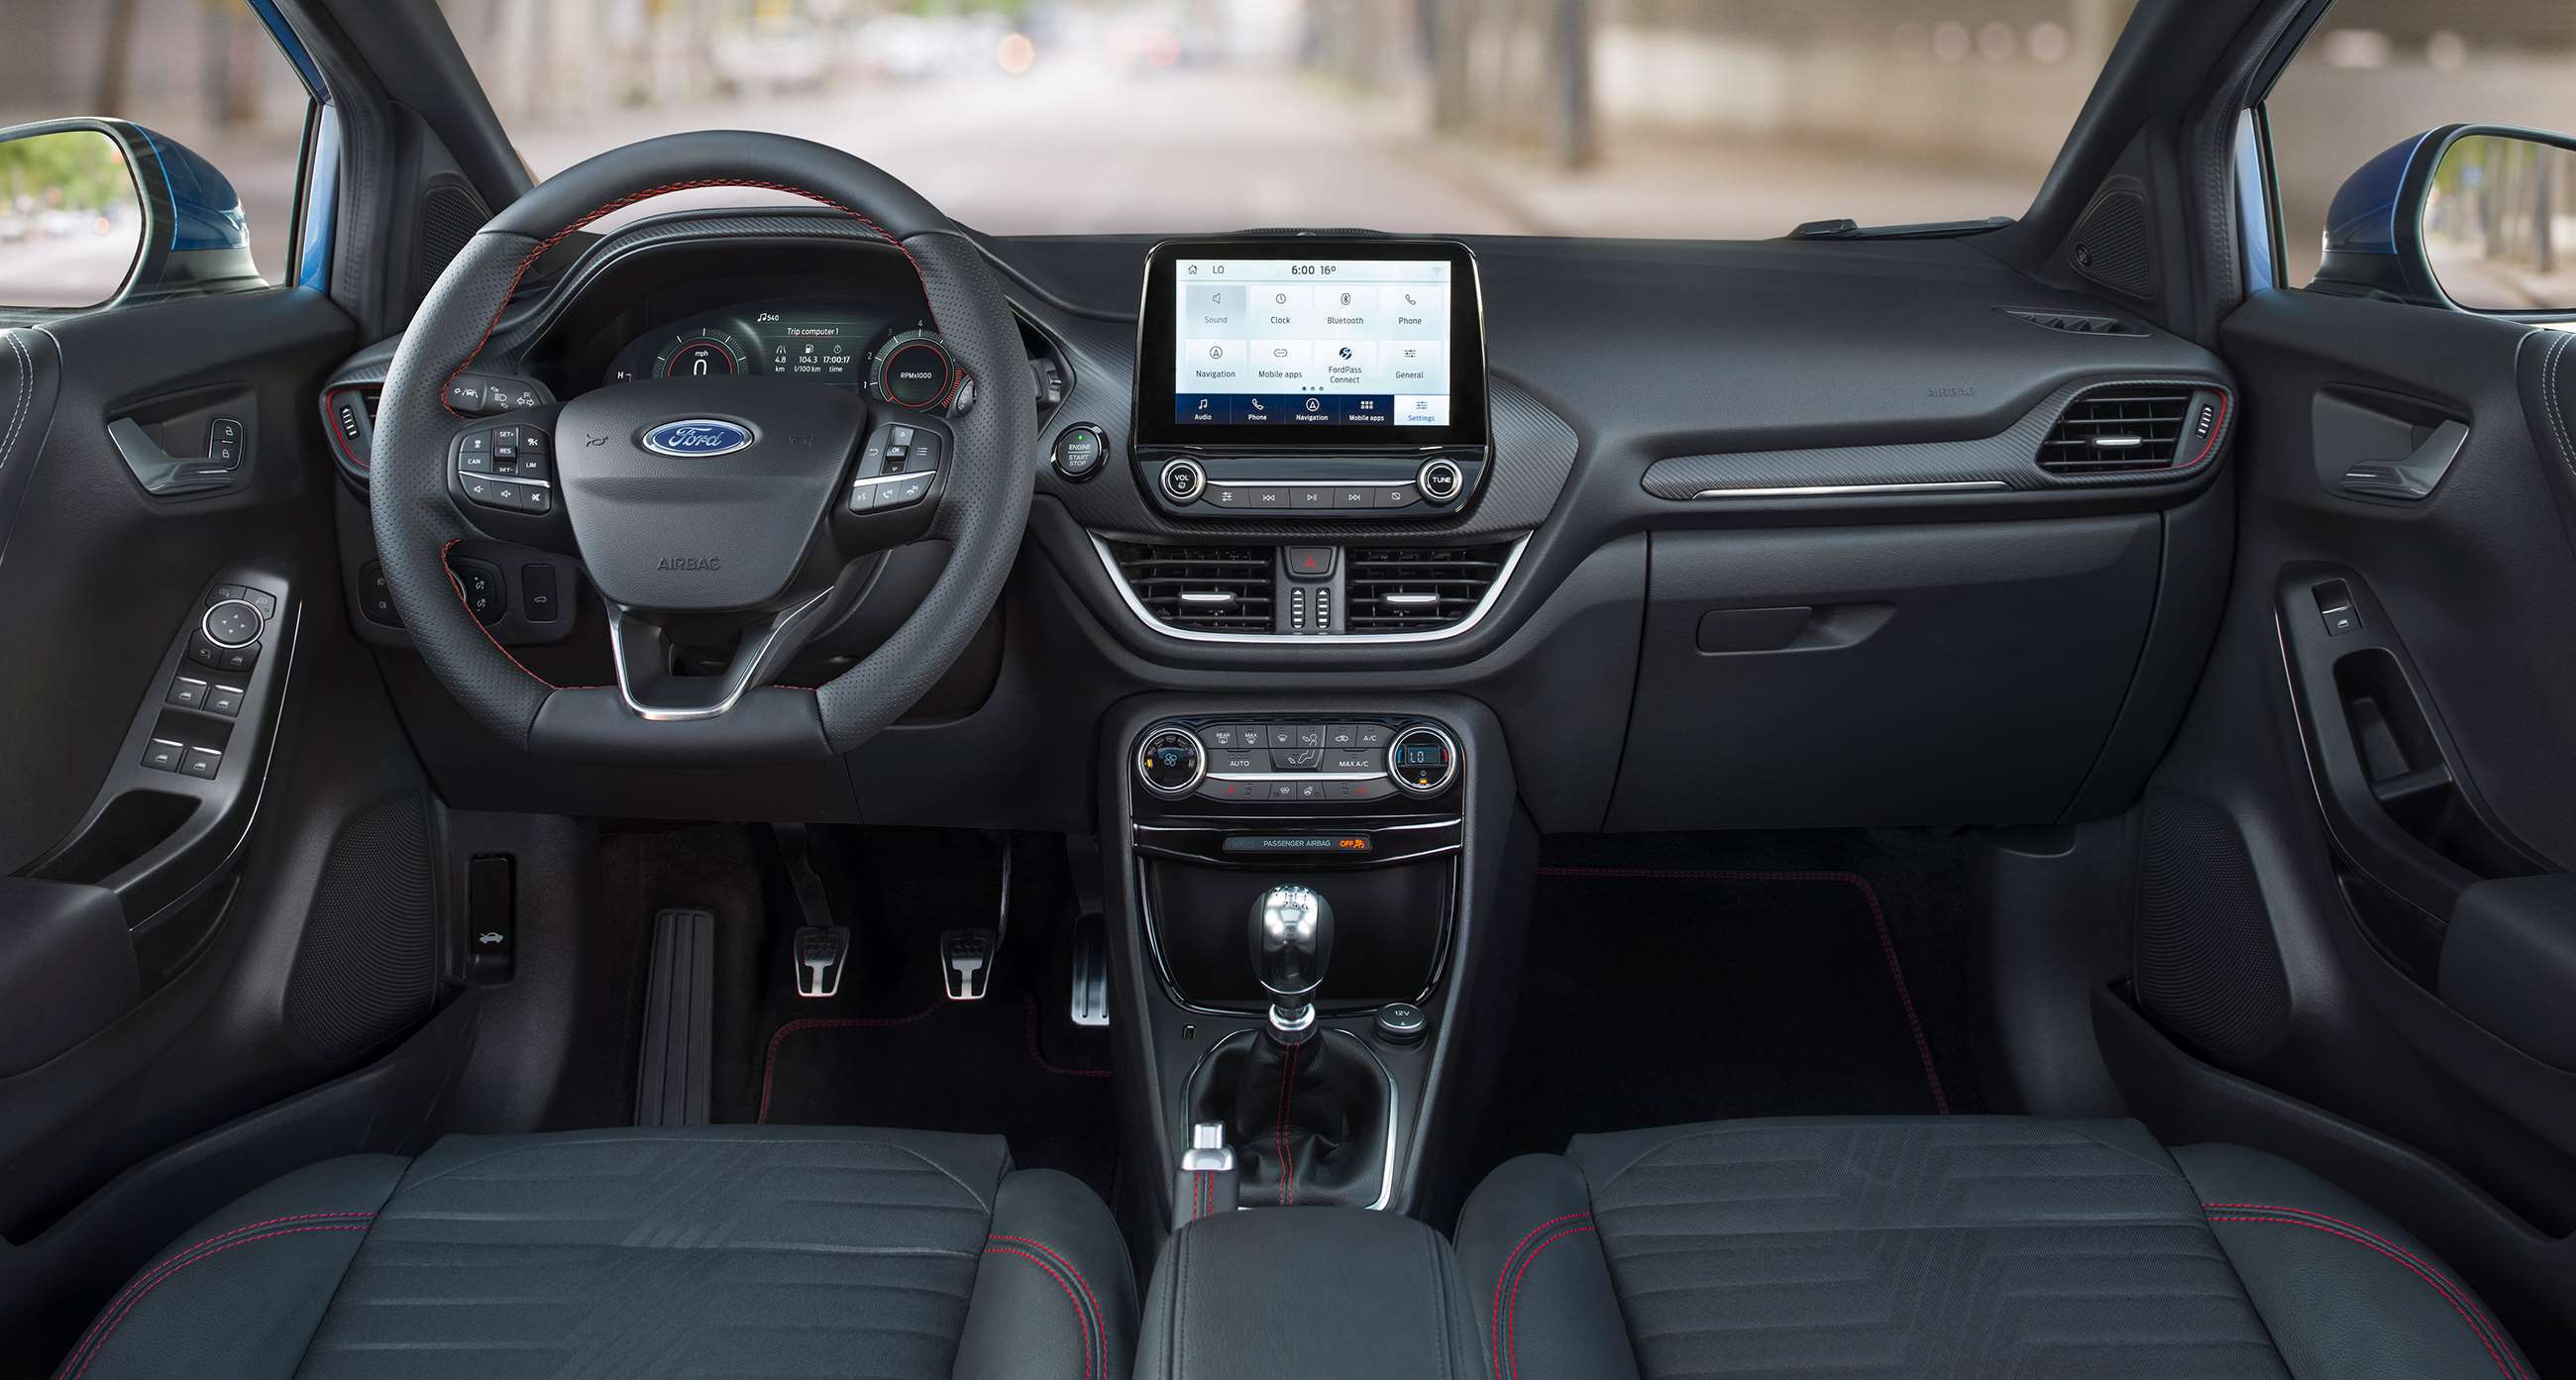 2019-ford-puma-interior-goodwood-25062019.jpg